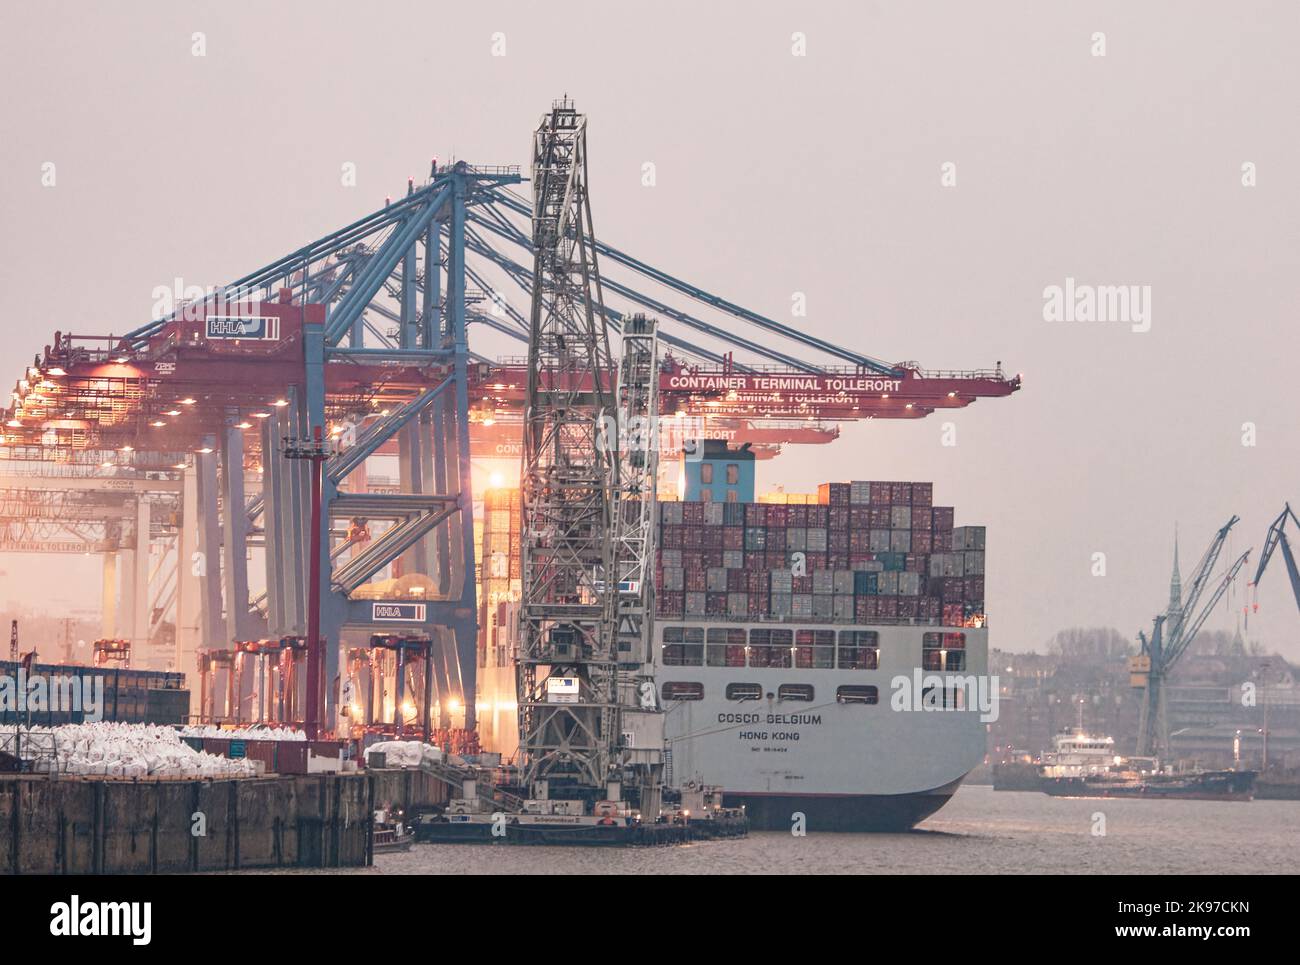 Hamburg, 23. Februar 2014: COSCO Containerschiff im Hamburger Hafen am Container Termninal Tollerort. Stockfoto